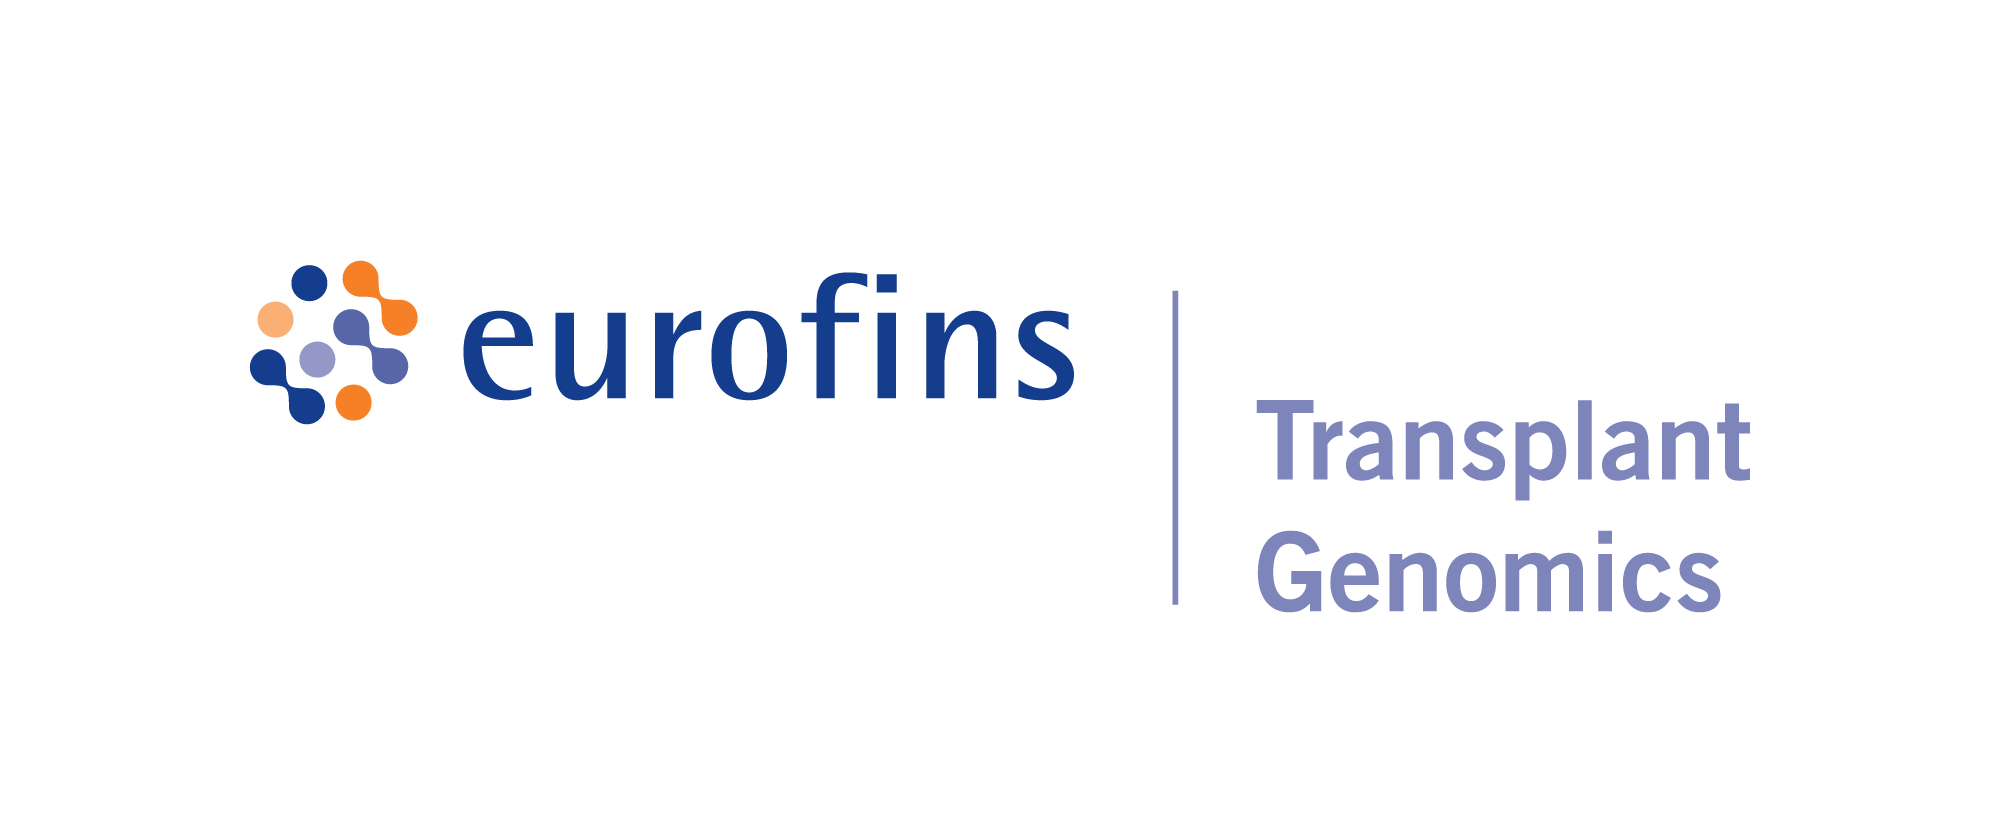 Eurofins Transplant Genomics